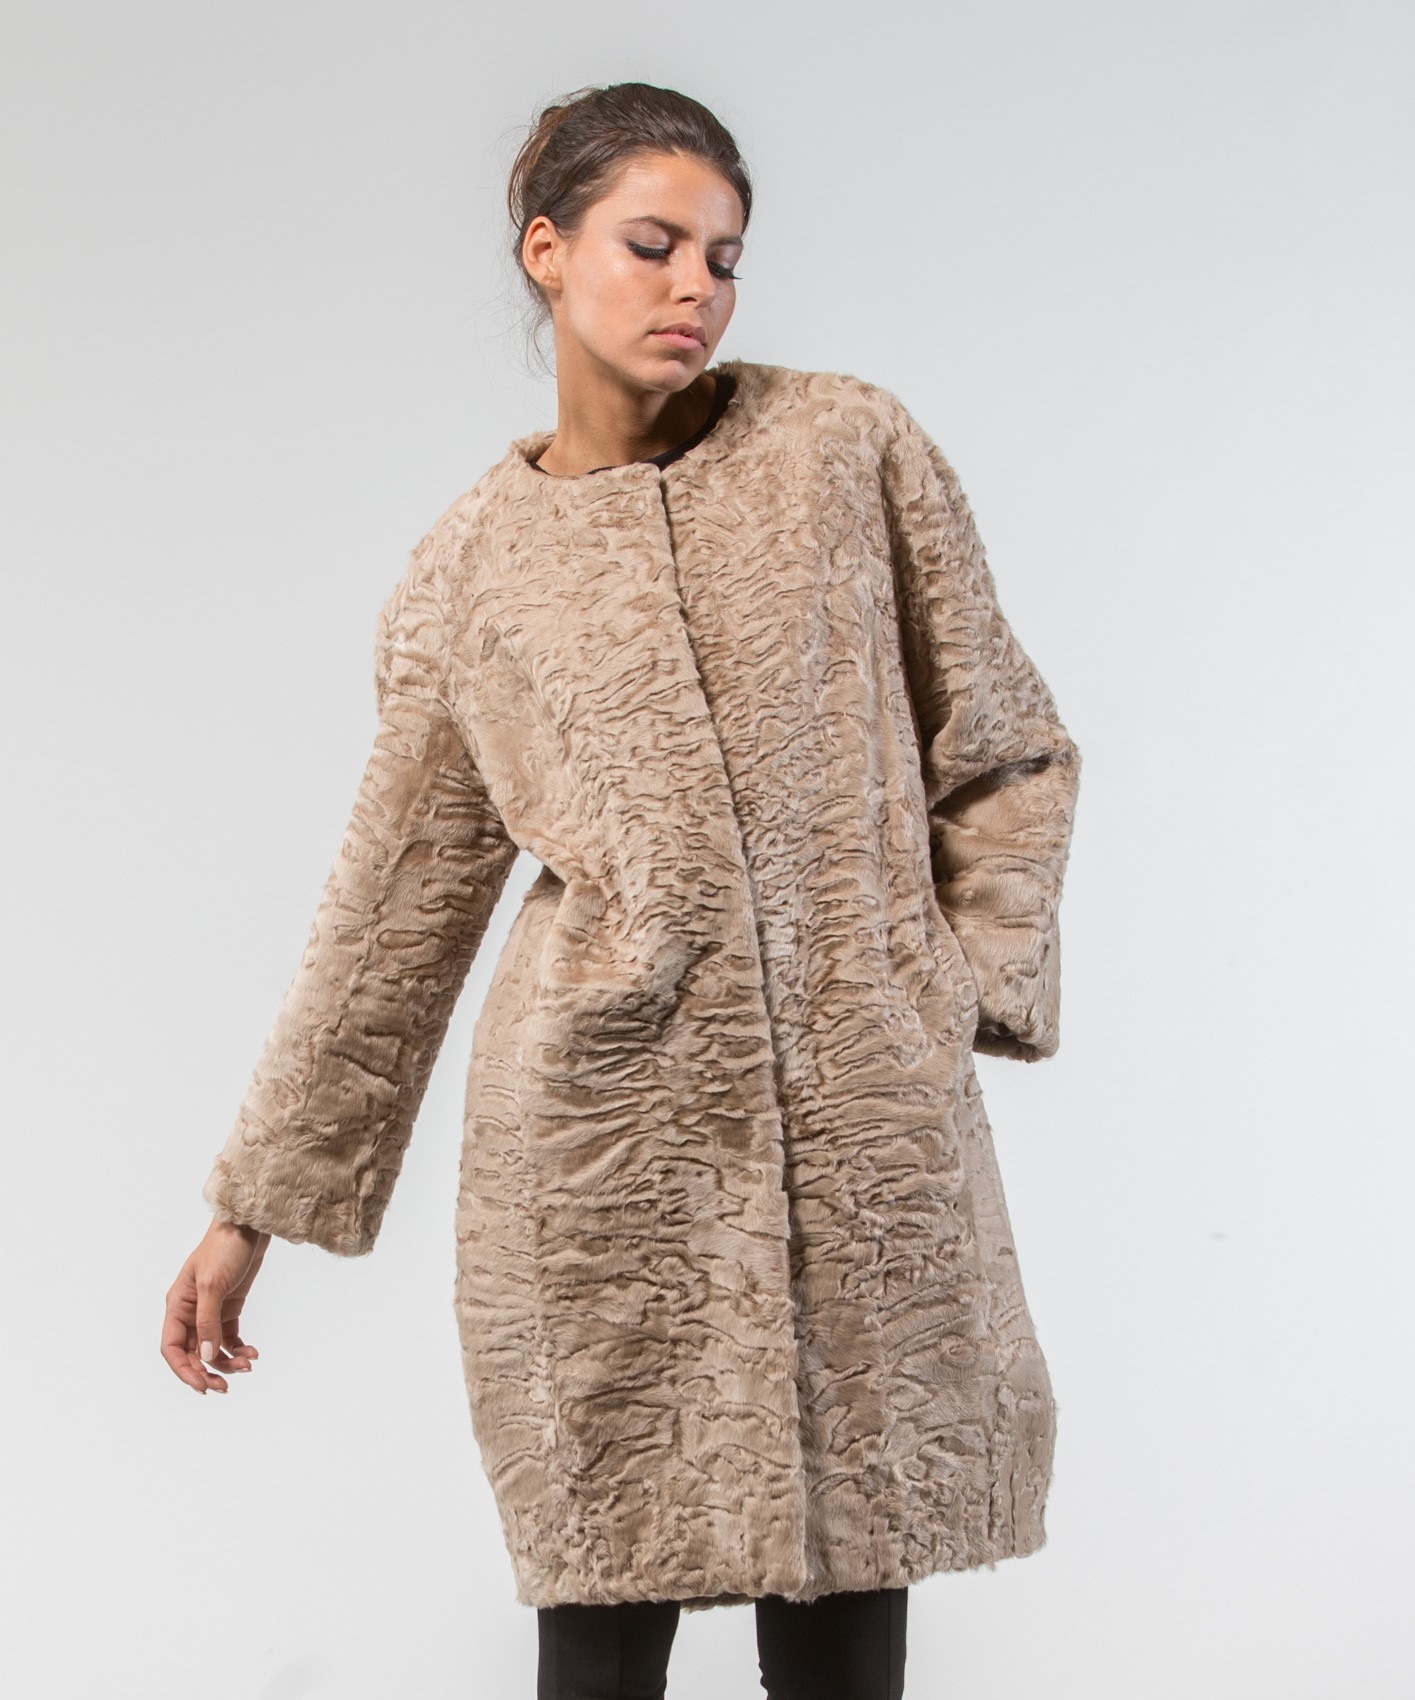 Beige Astrakhan Fur Coat .100% Real Fur Coats and Accessories.